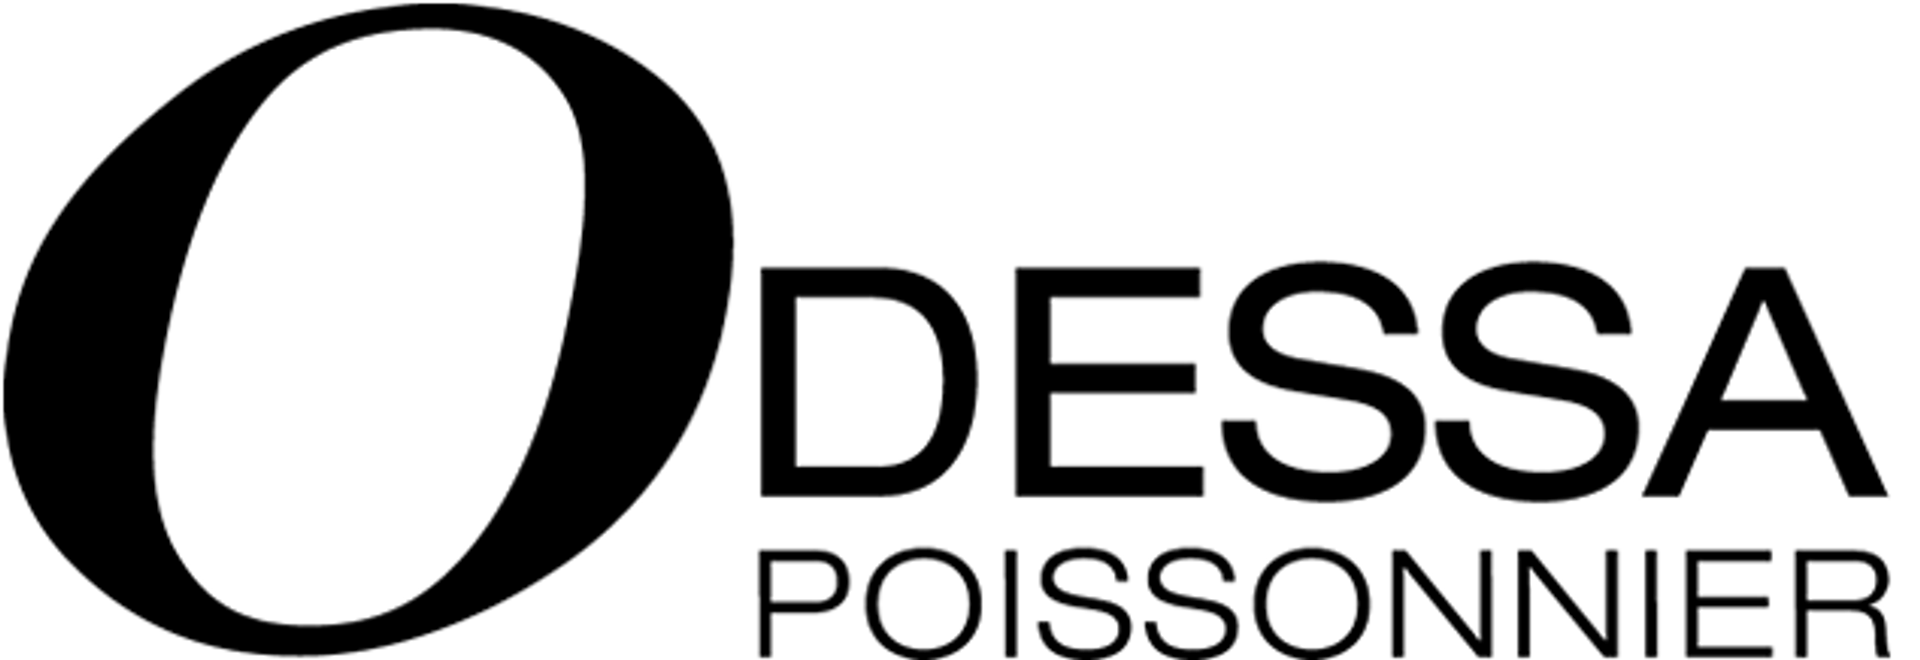 ODESSA POISSONNIER logo. Current weekly ad